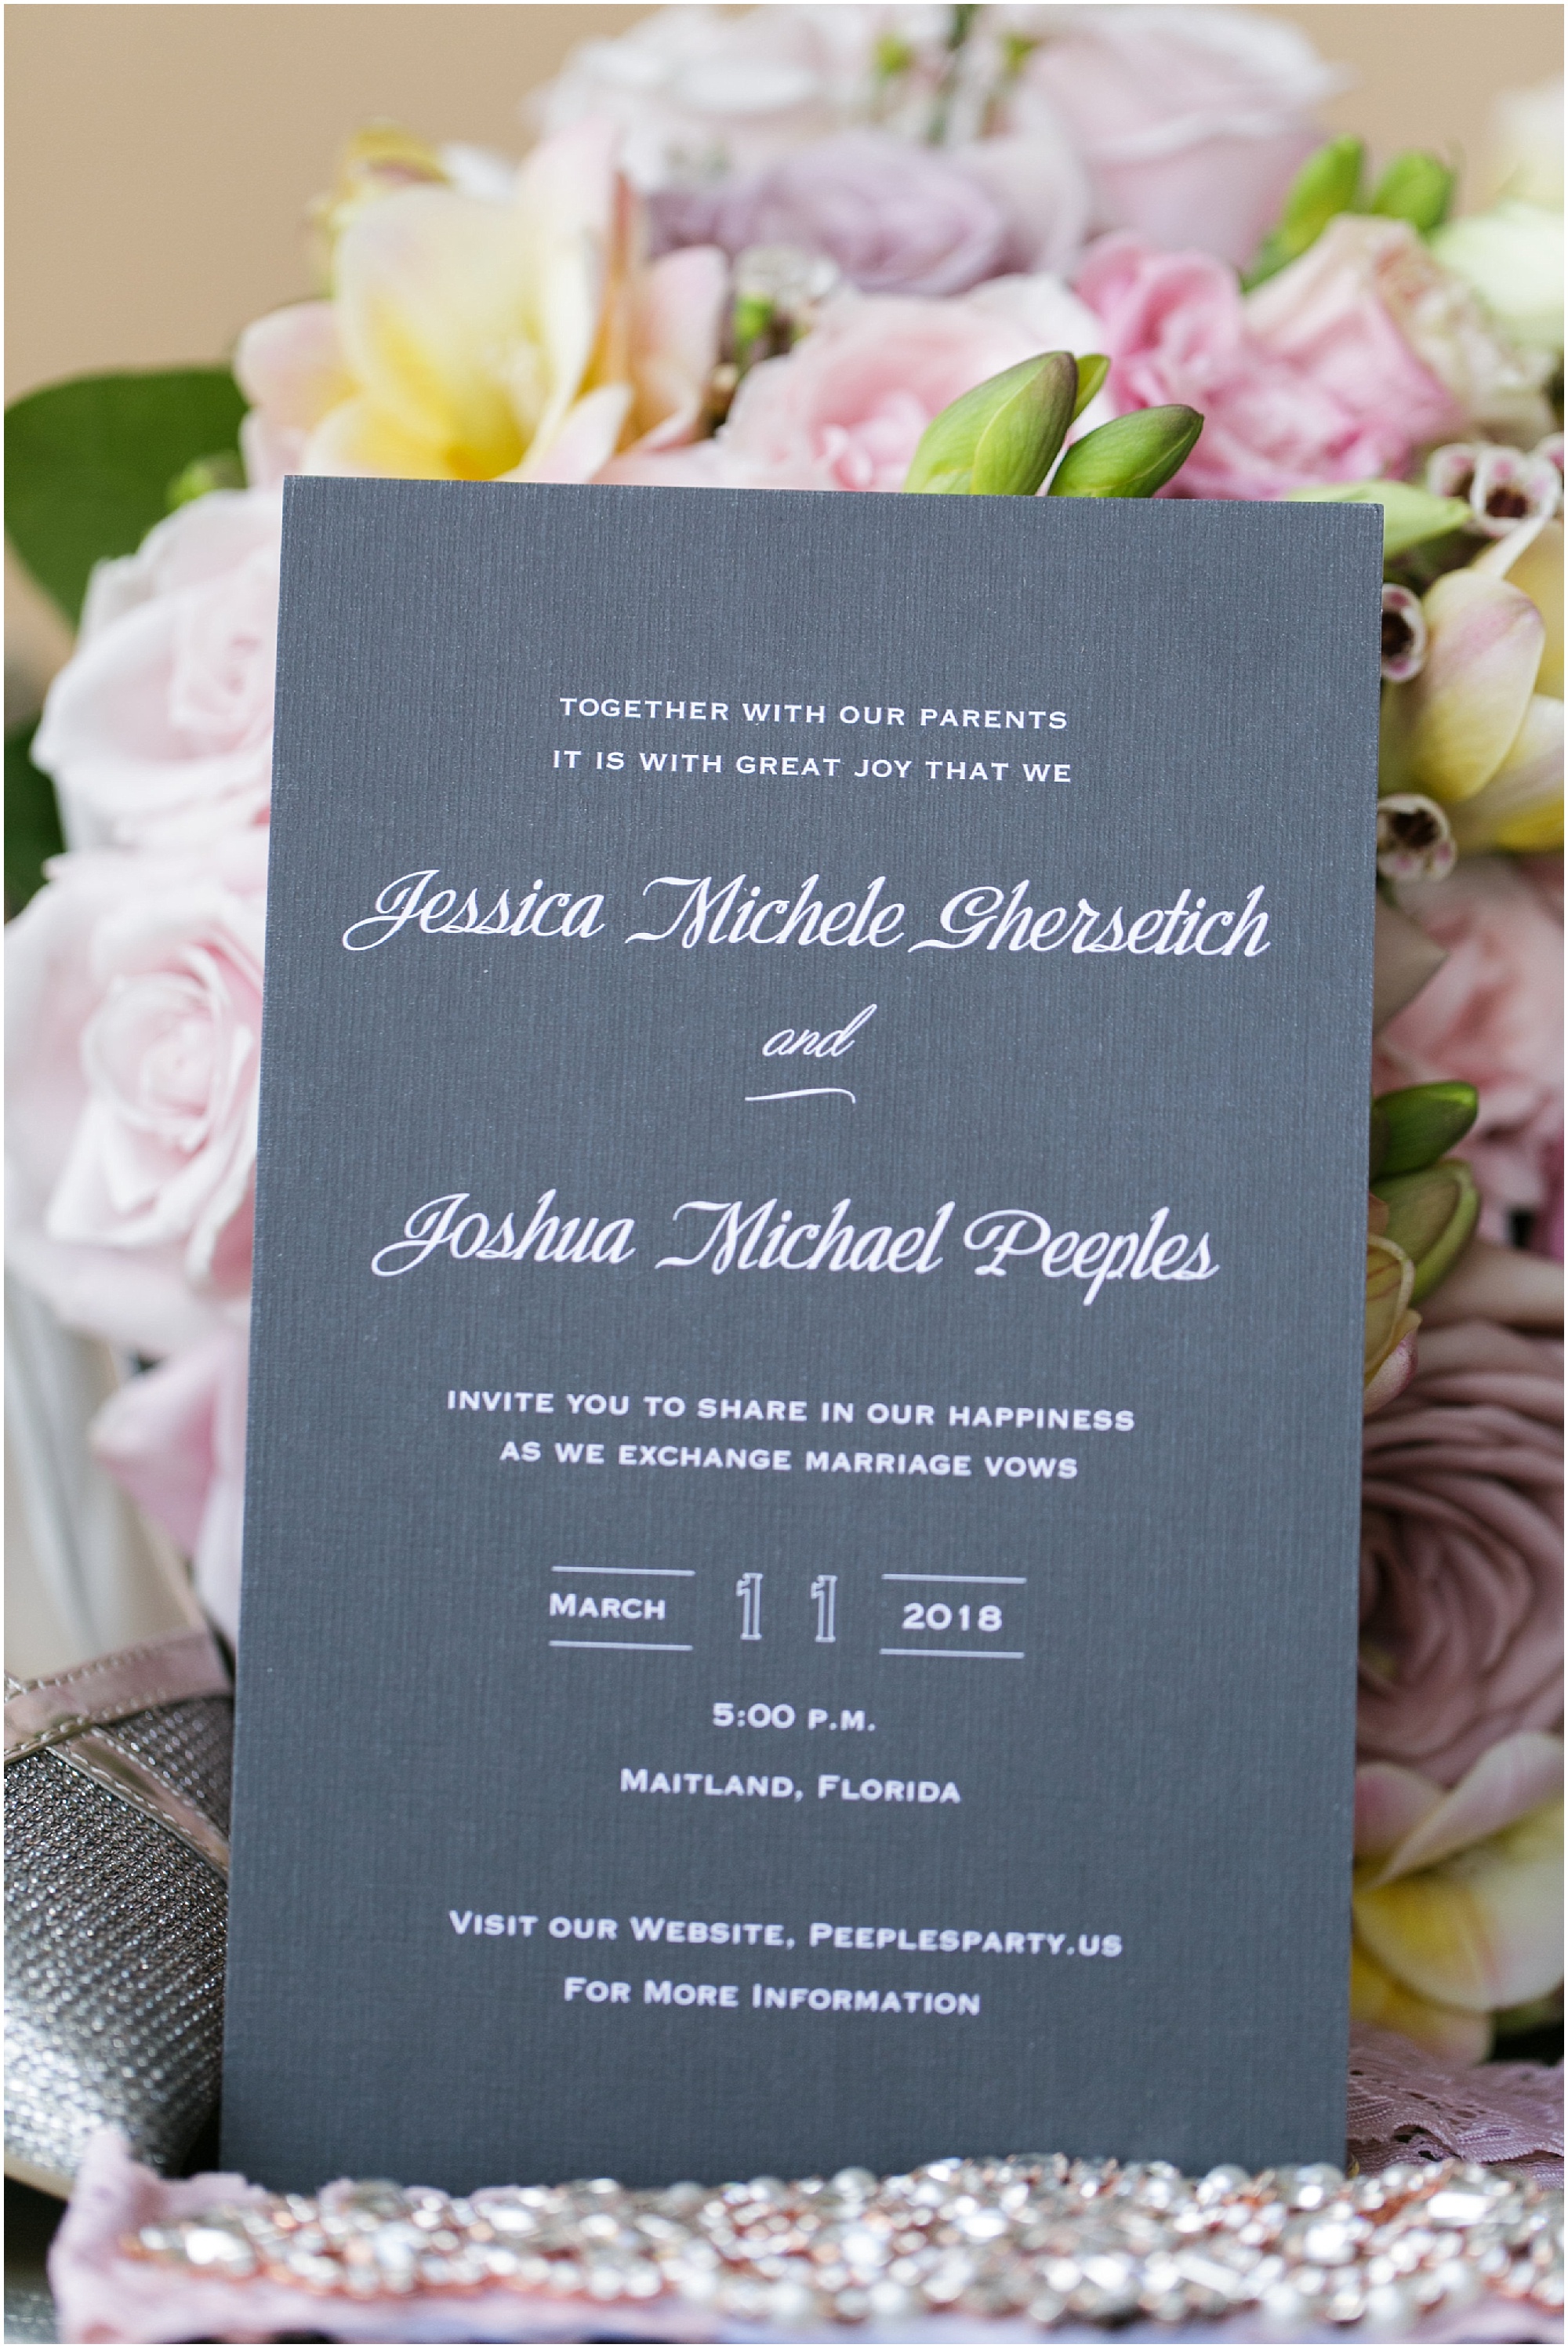 Wedding invitation to the wedding.